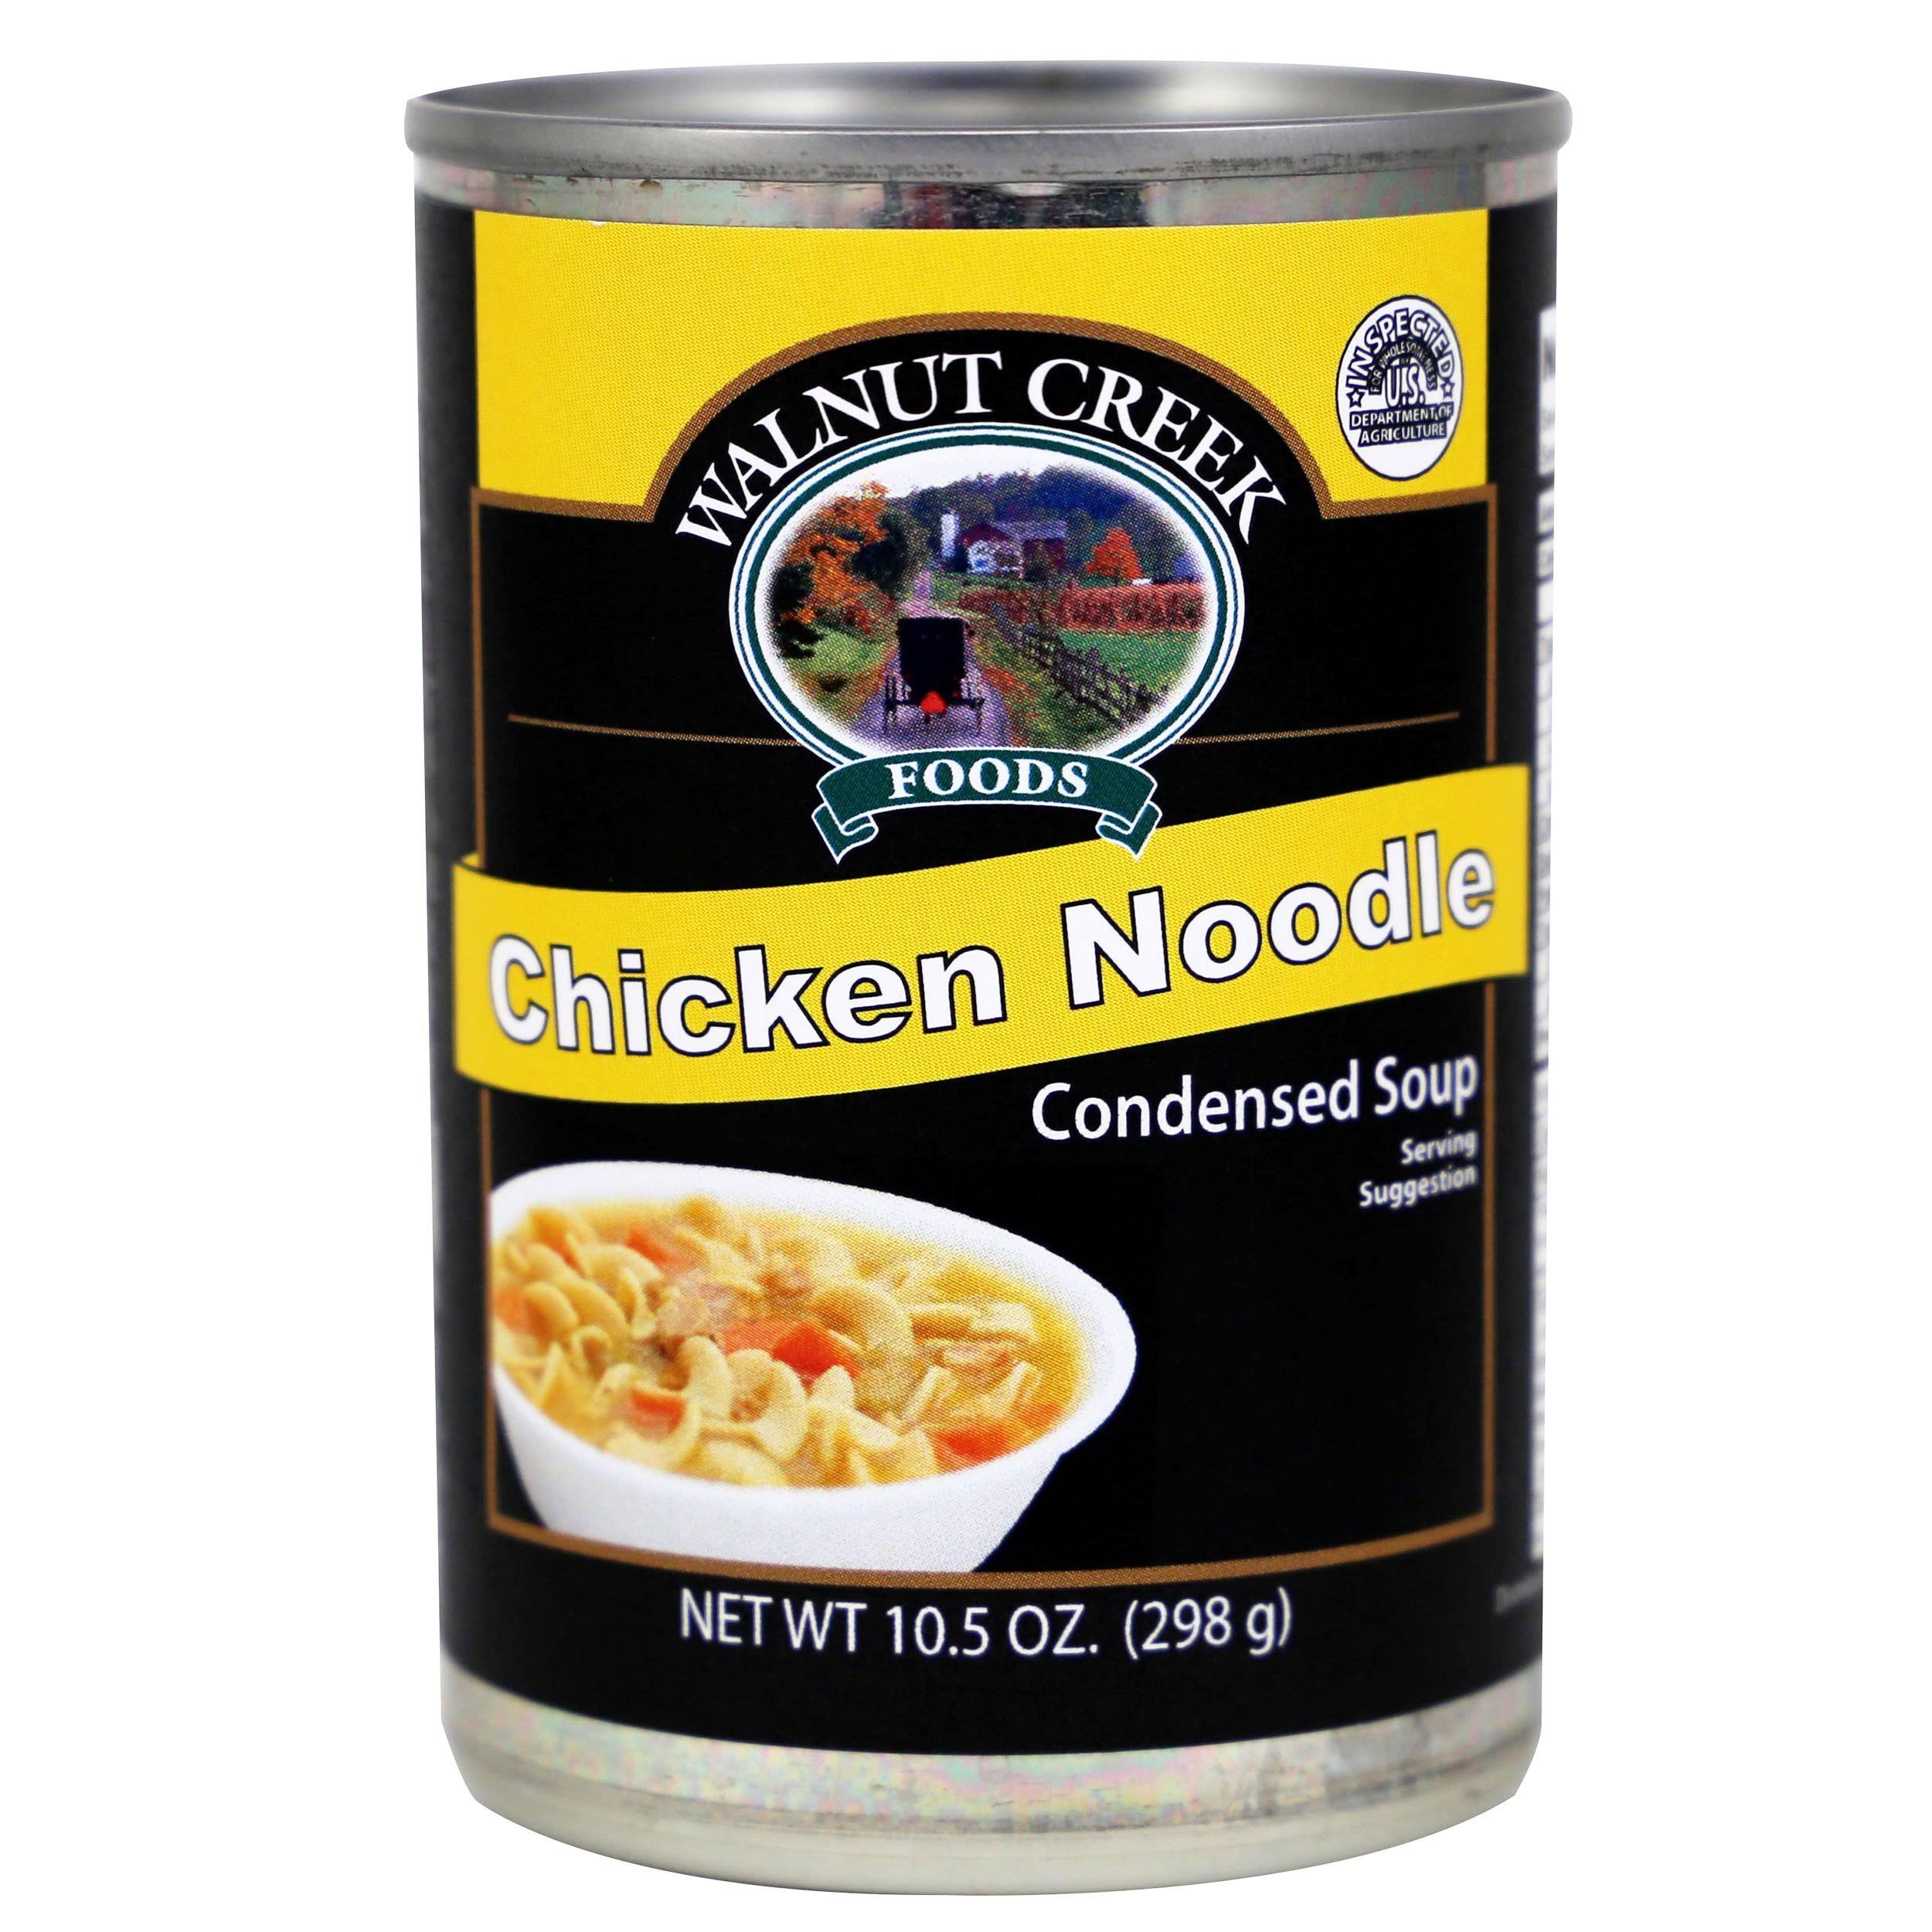 Walnut Creek Chicken Noodle Soup Condensed